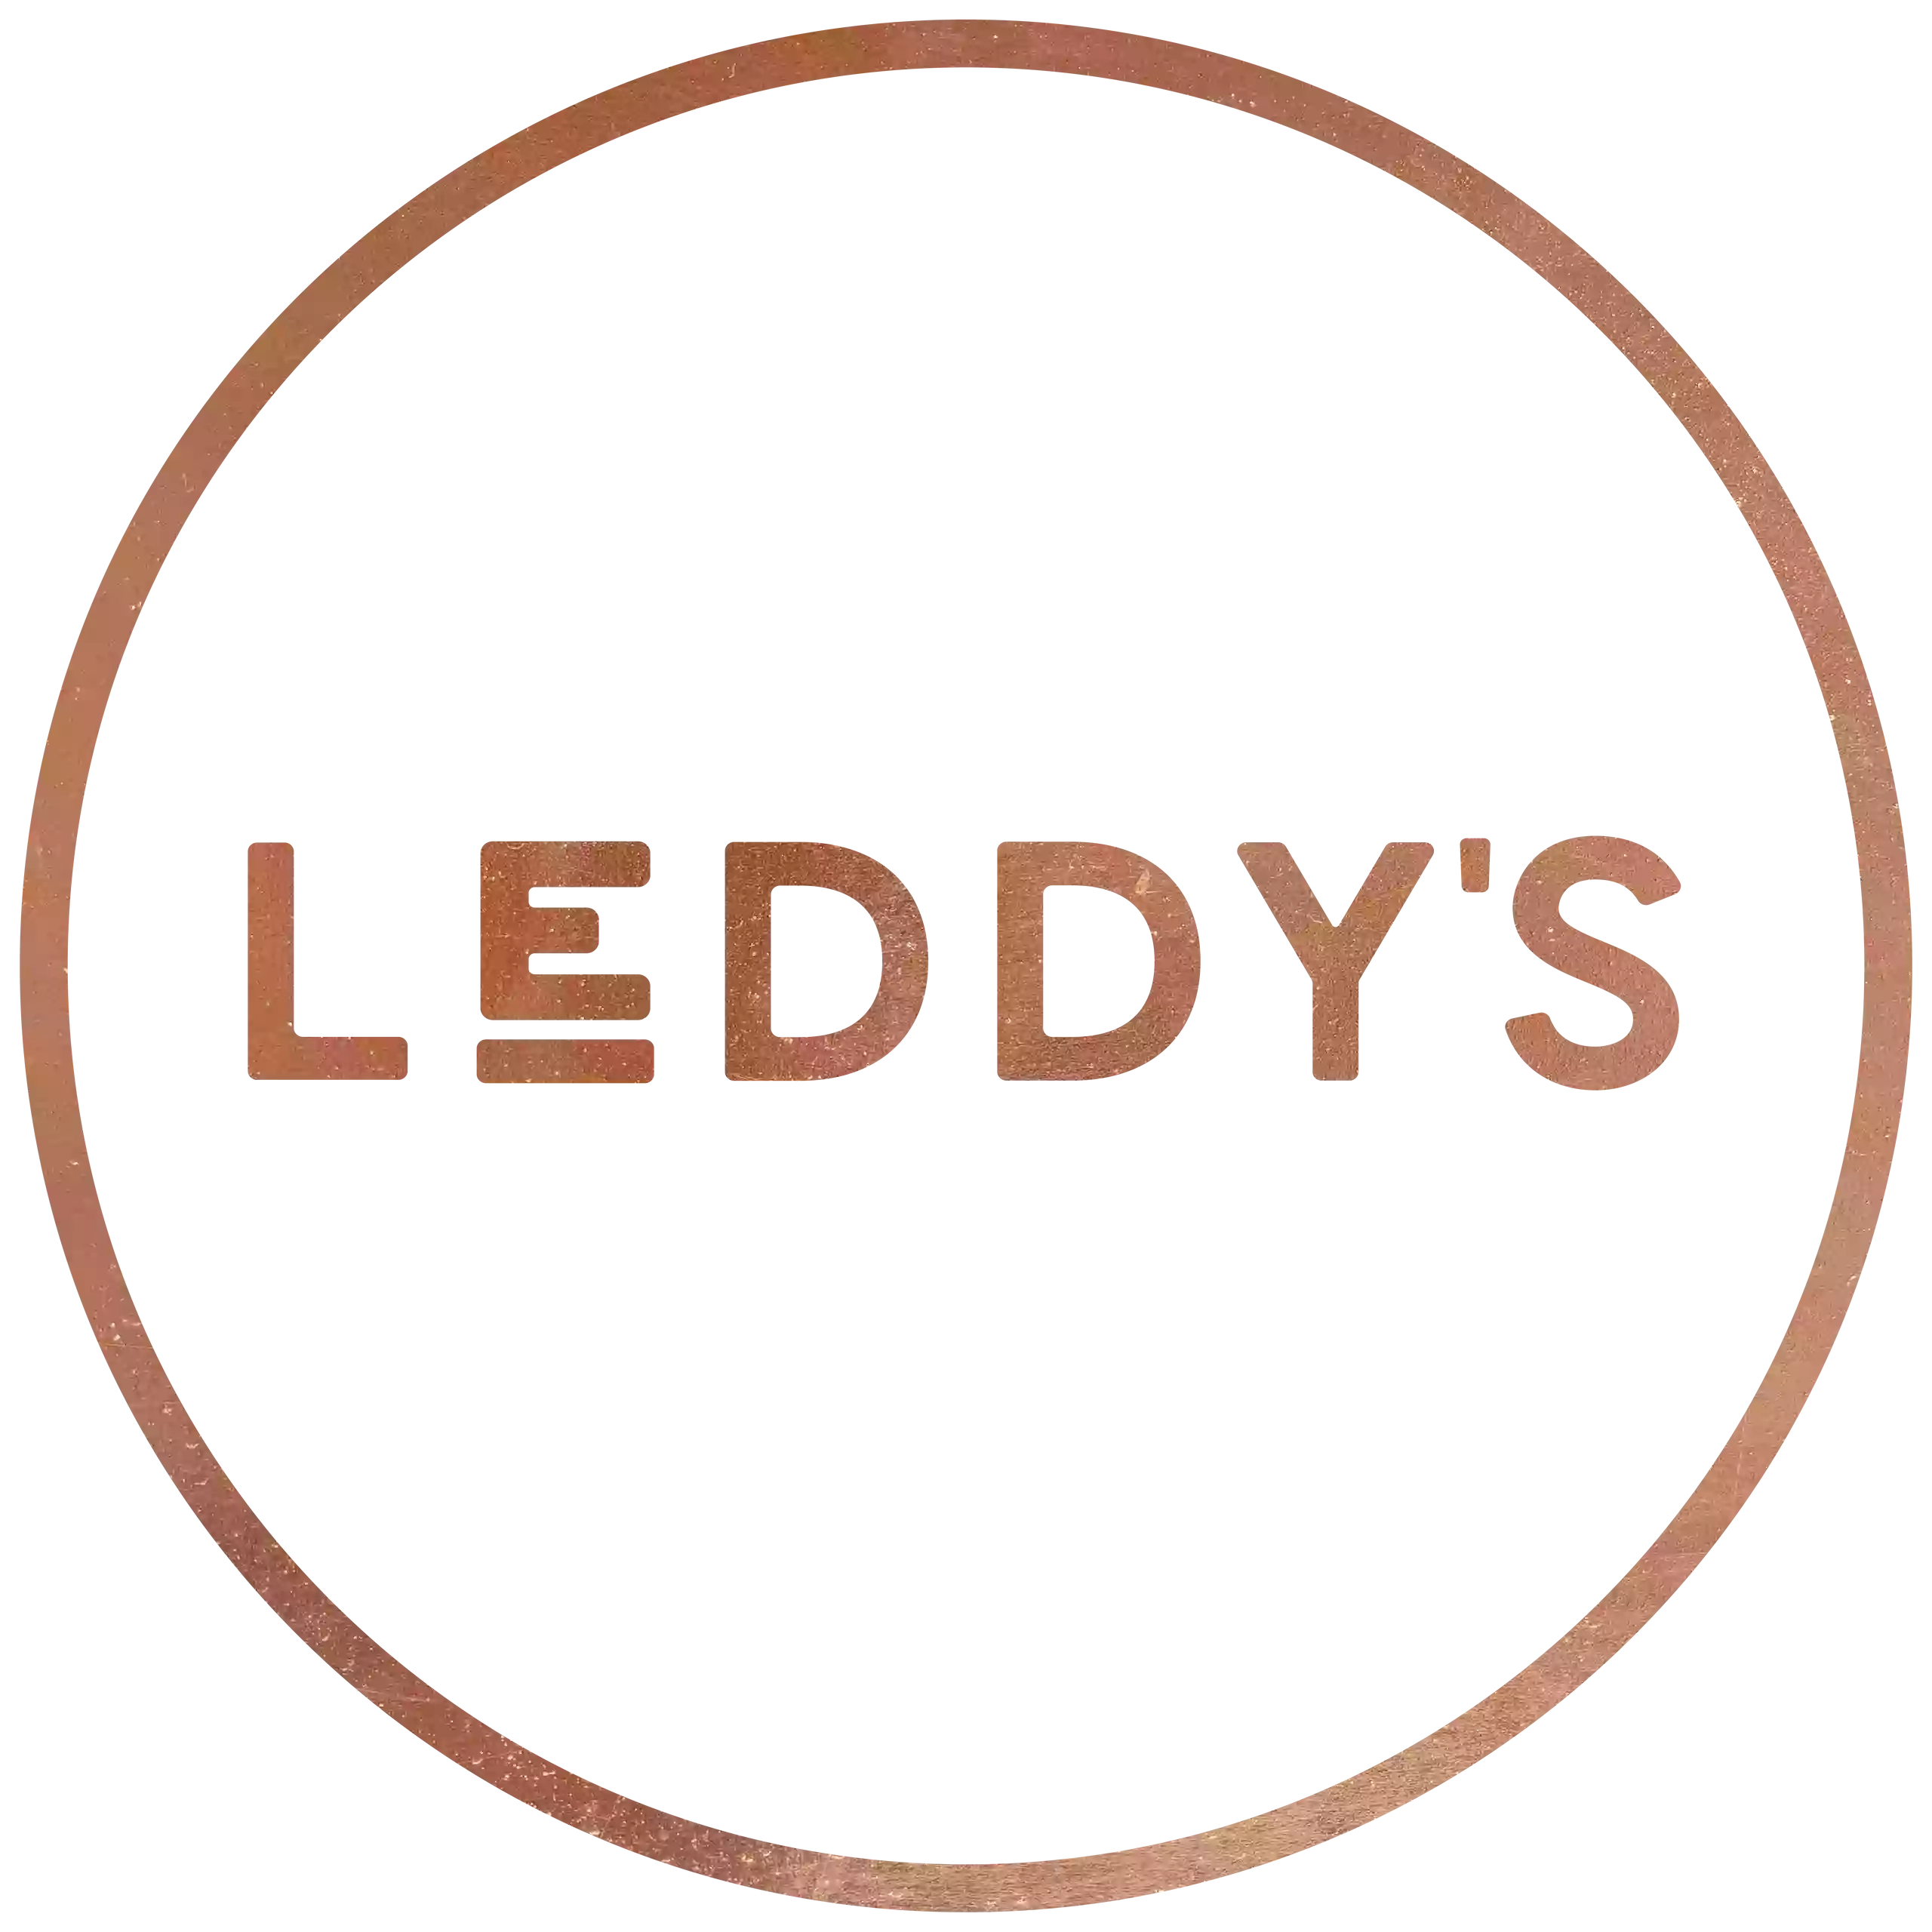 Leddy's